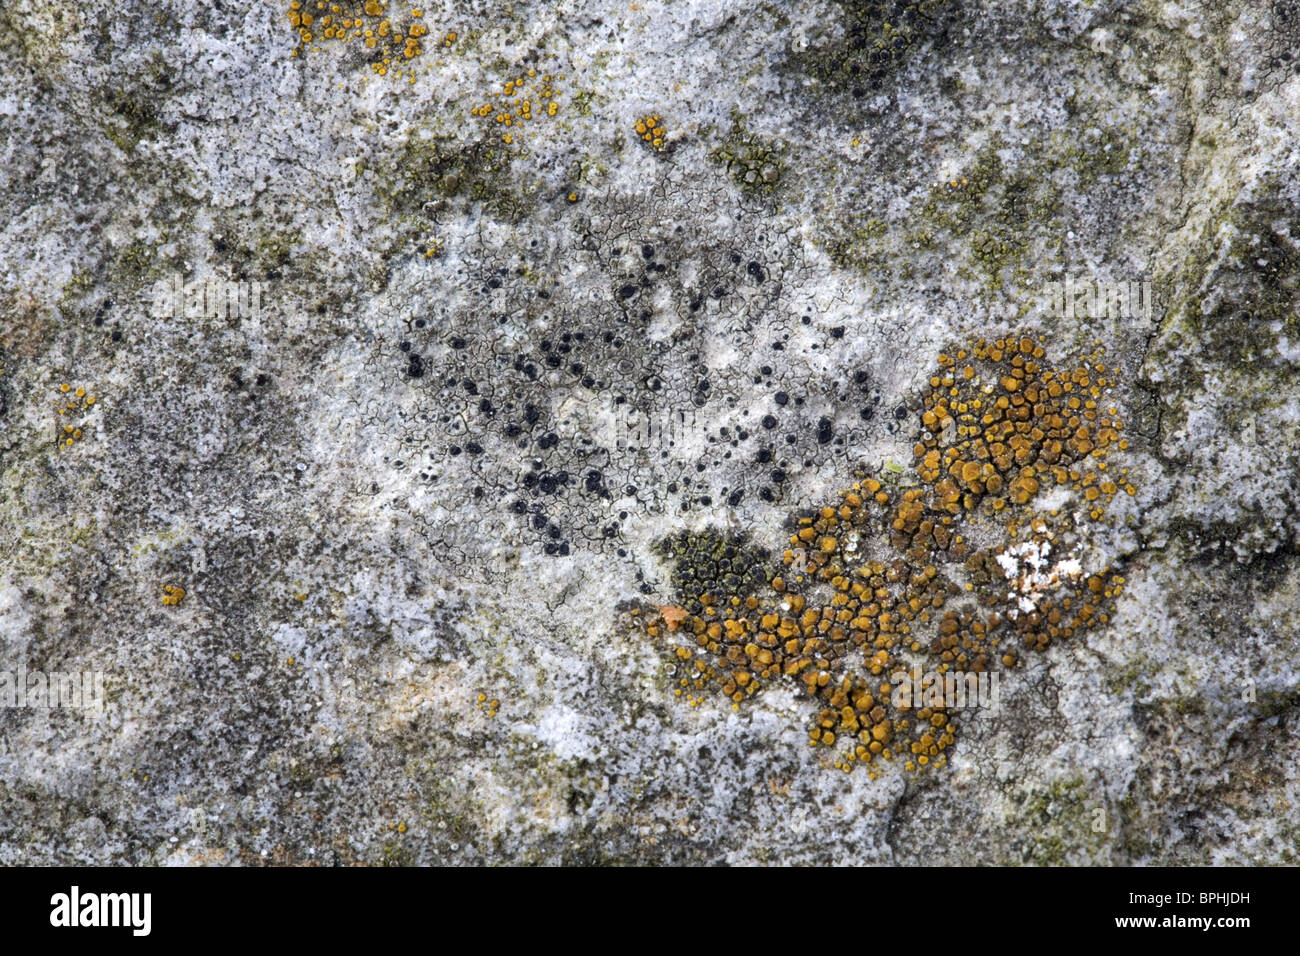 Lichens Rhizocarpon reductum (black spots) and Caloplaca holocarpa (yellow) on granite, Streefkerk, Holland Stock Photo